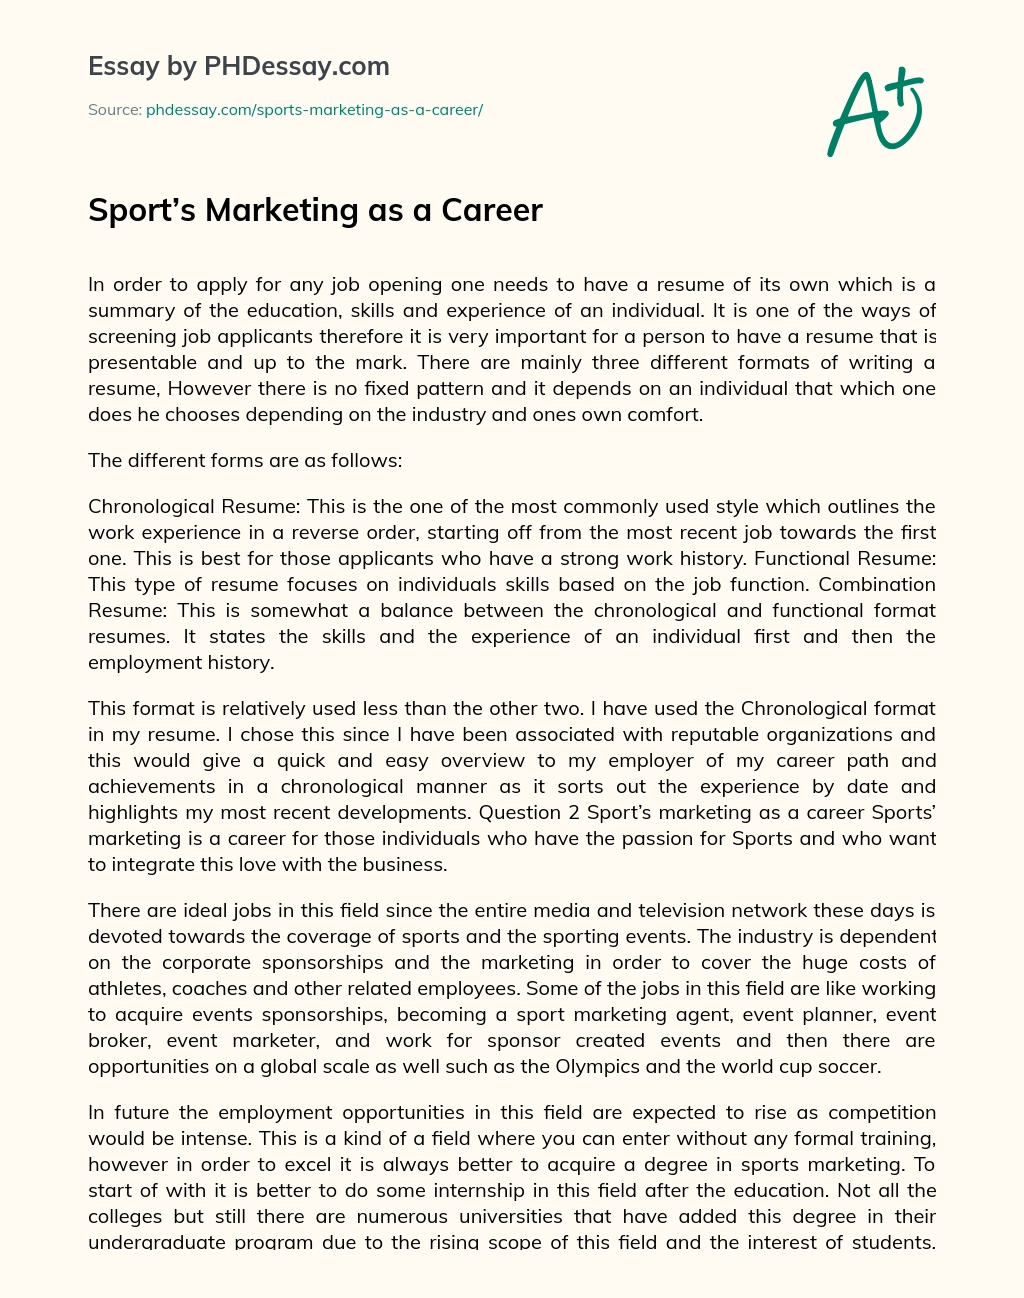 Sport’s Marketing as a Career essay